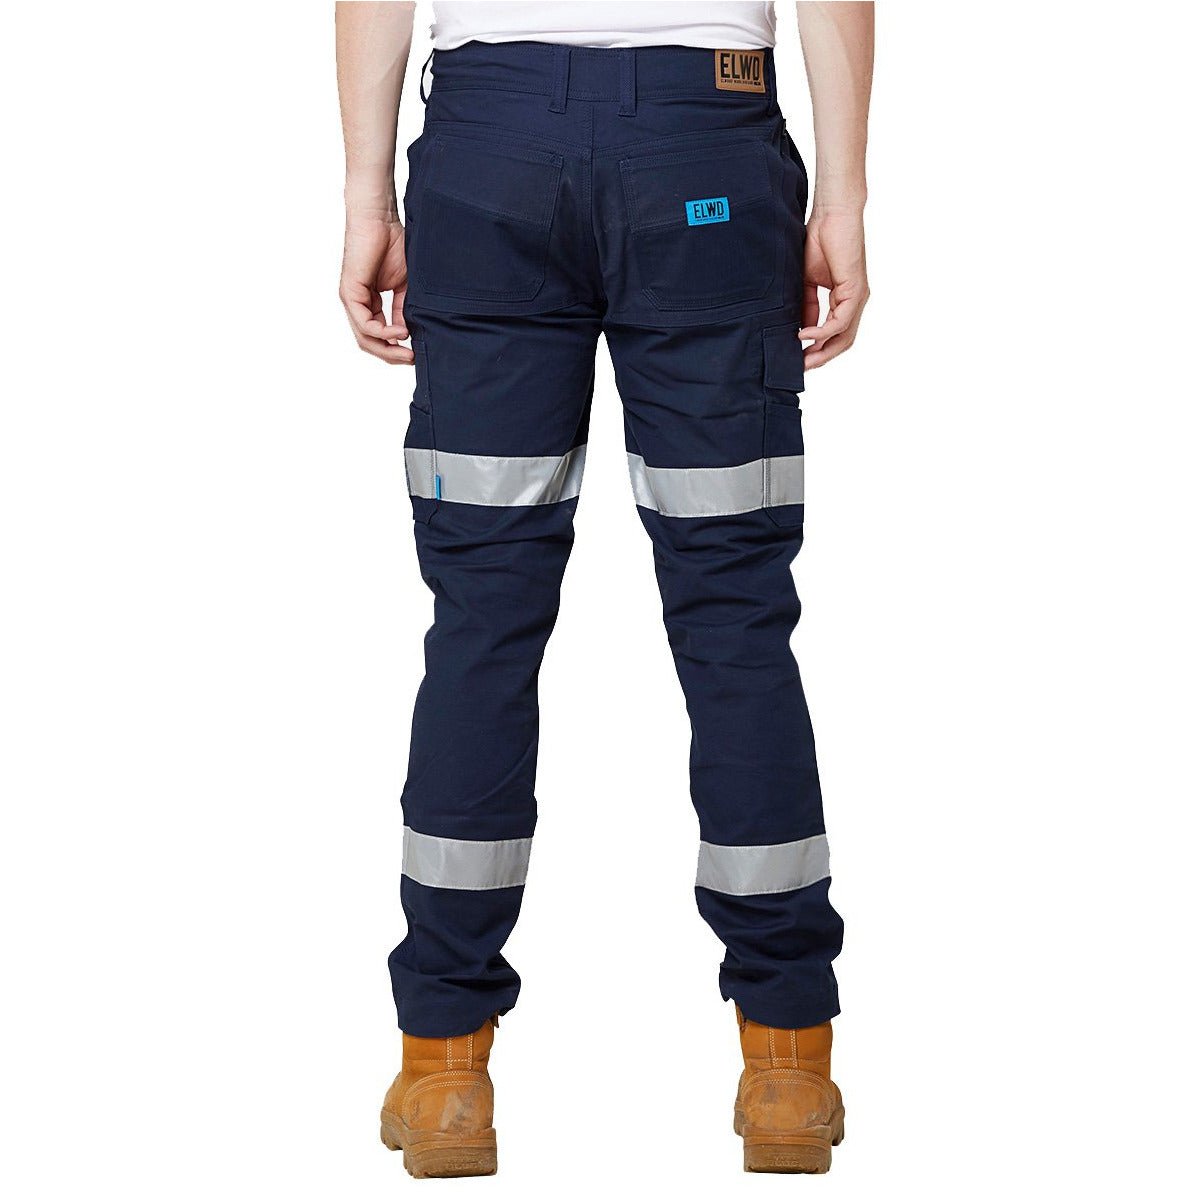 700STOR Safety Pants: Orange Hi Vis Waterproof – Reflective Apparel Inc